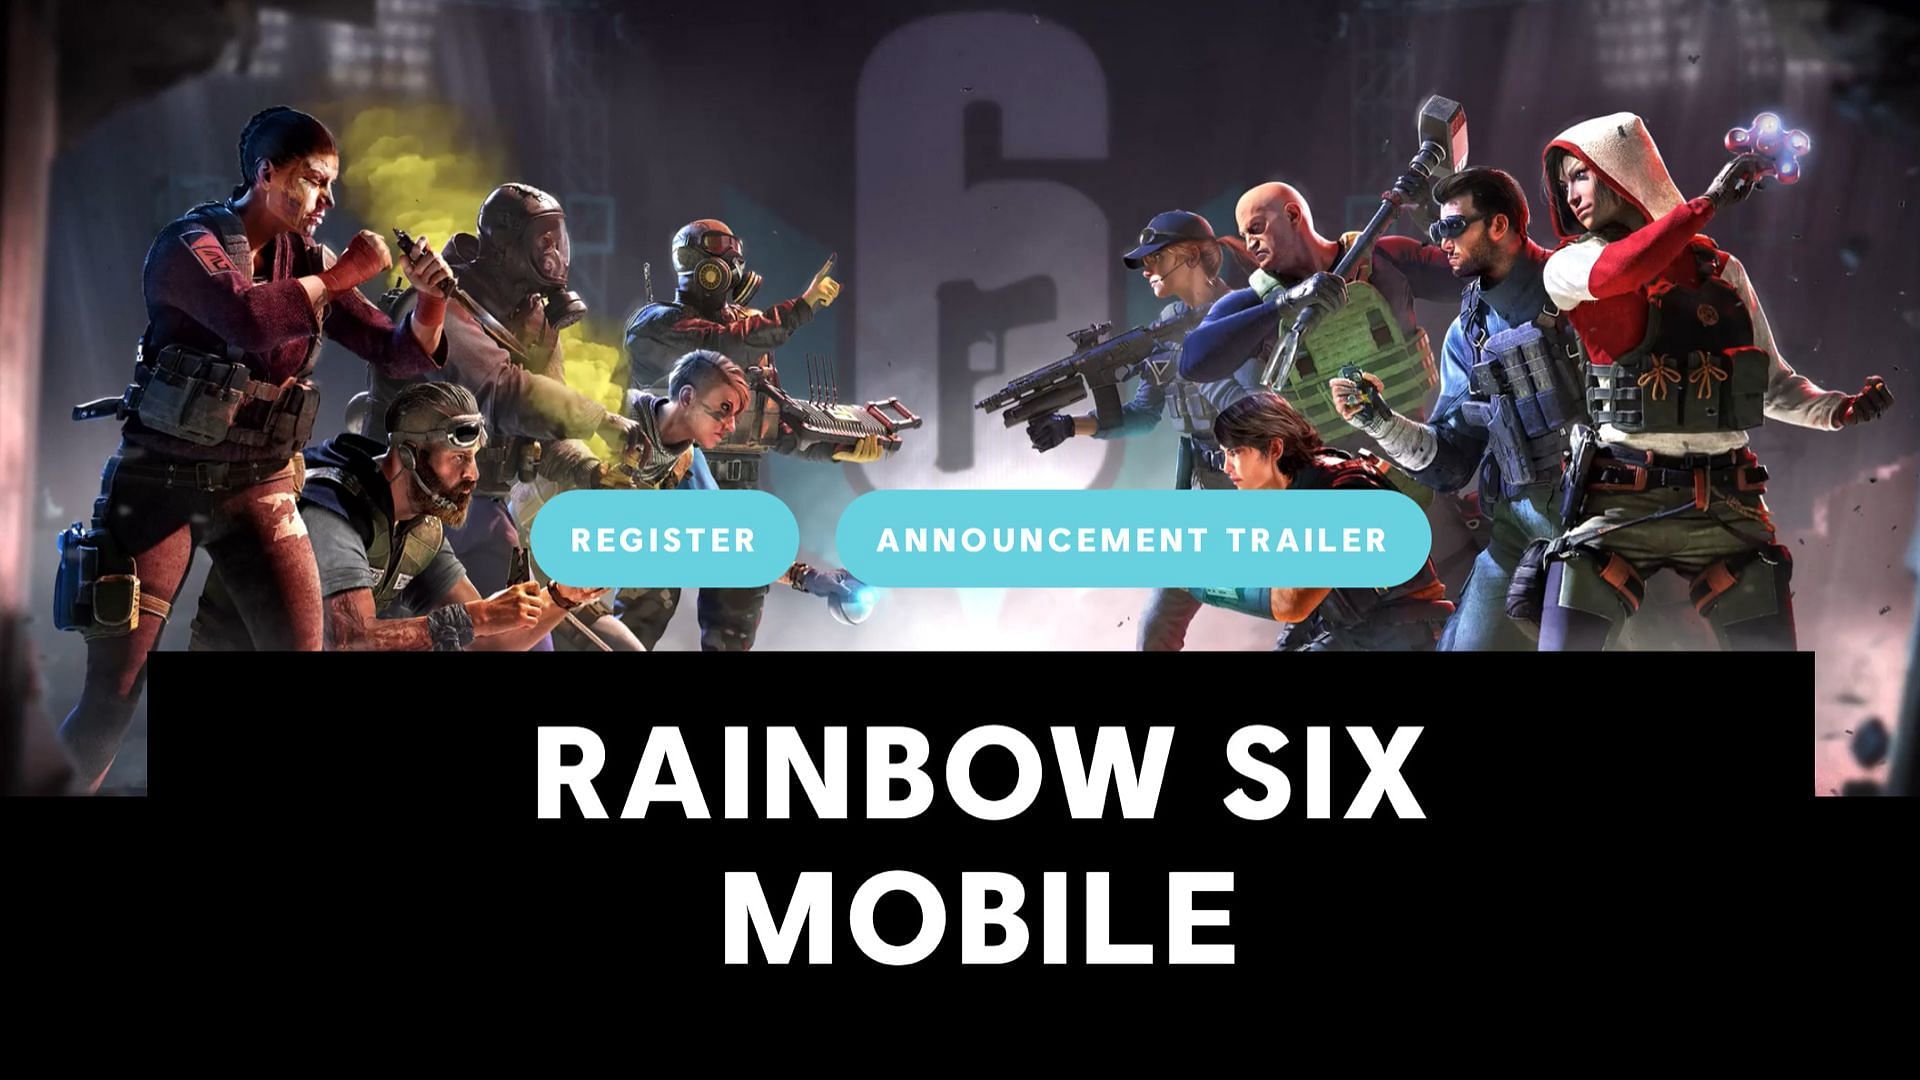 R6 Siege Mobile Announced - Rainbow Six Siege Mobile